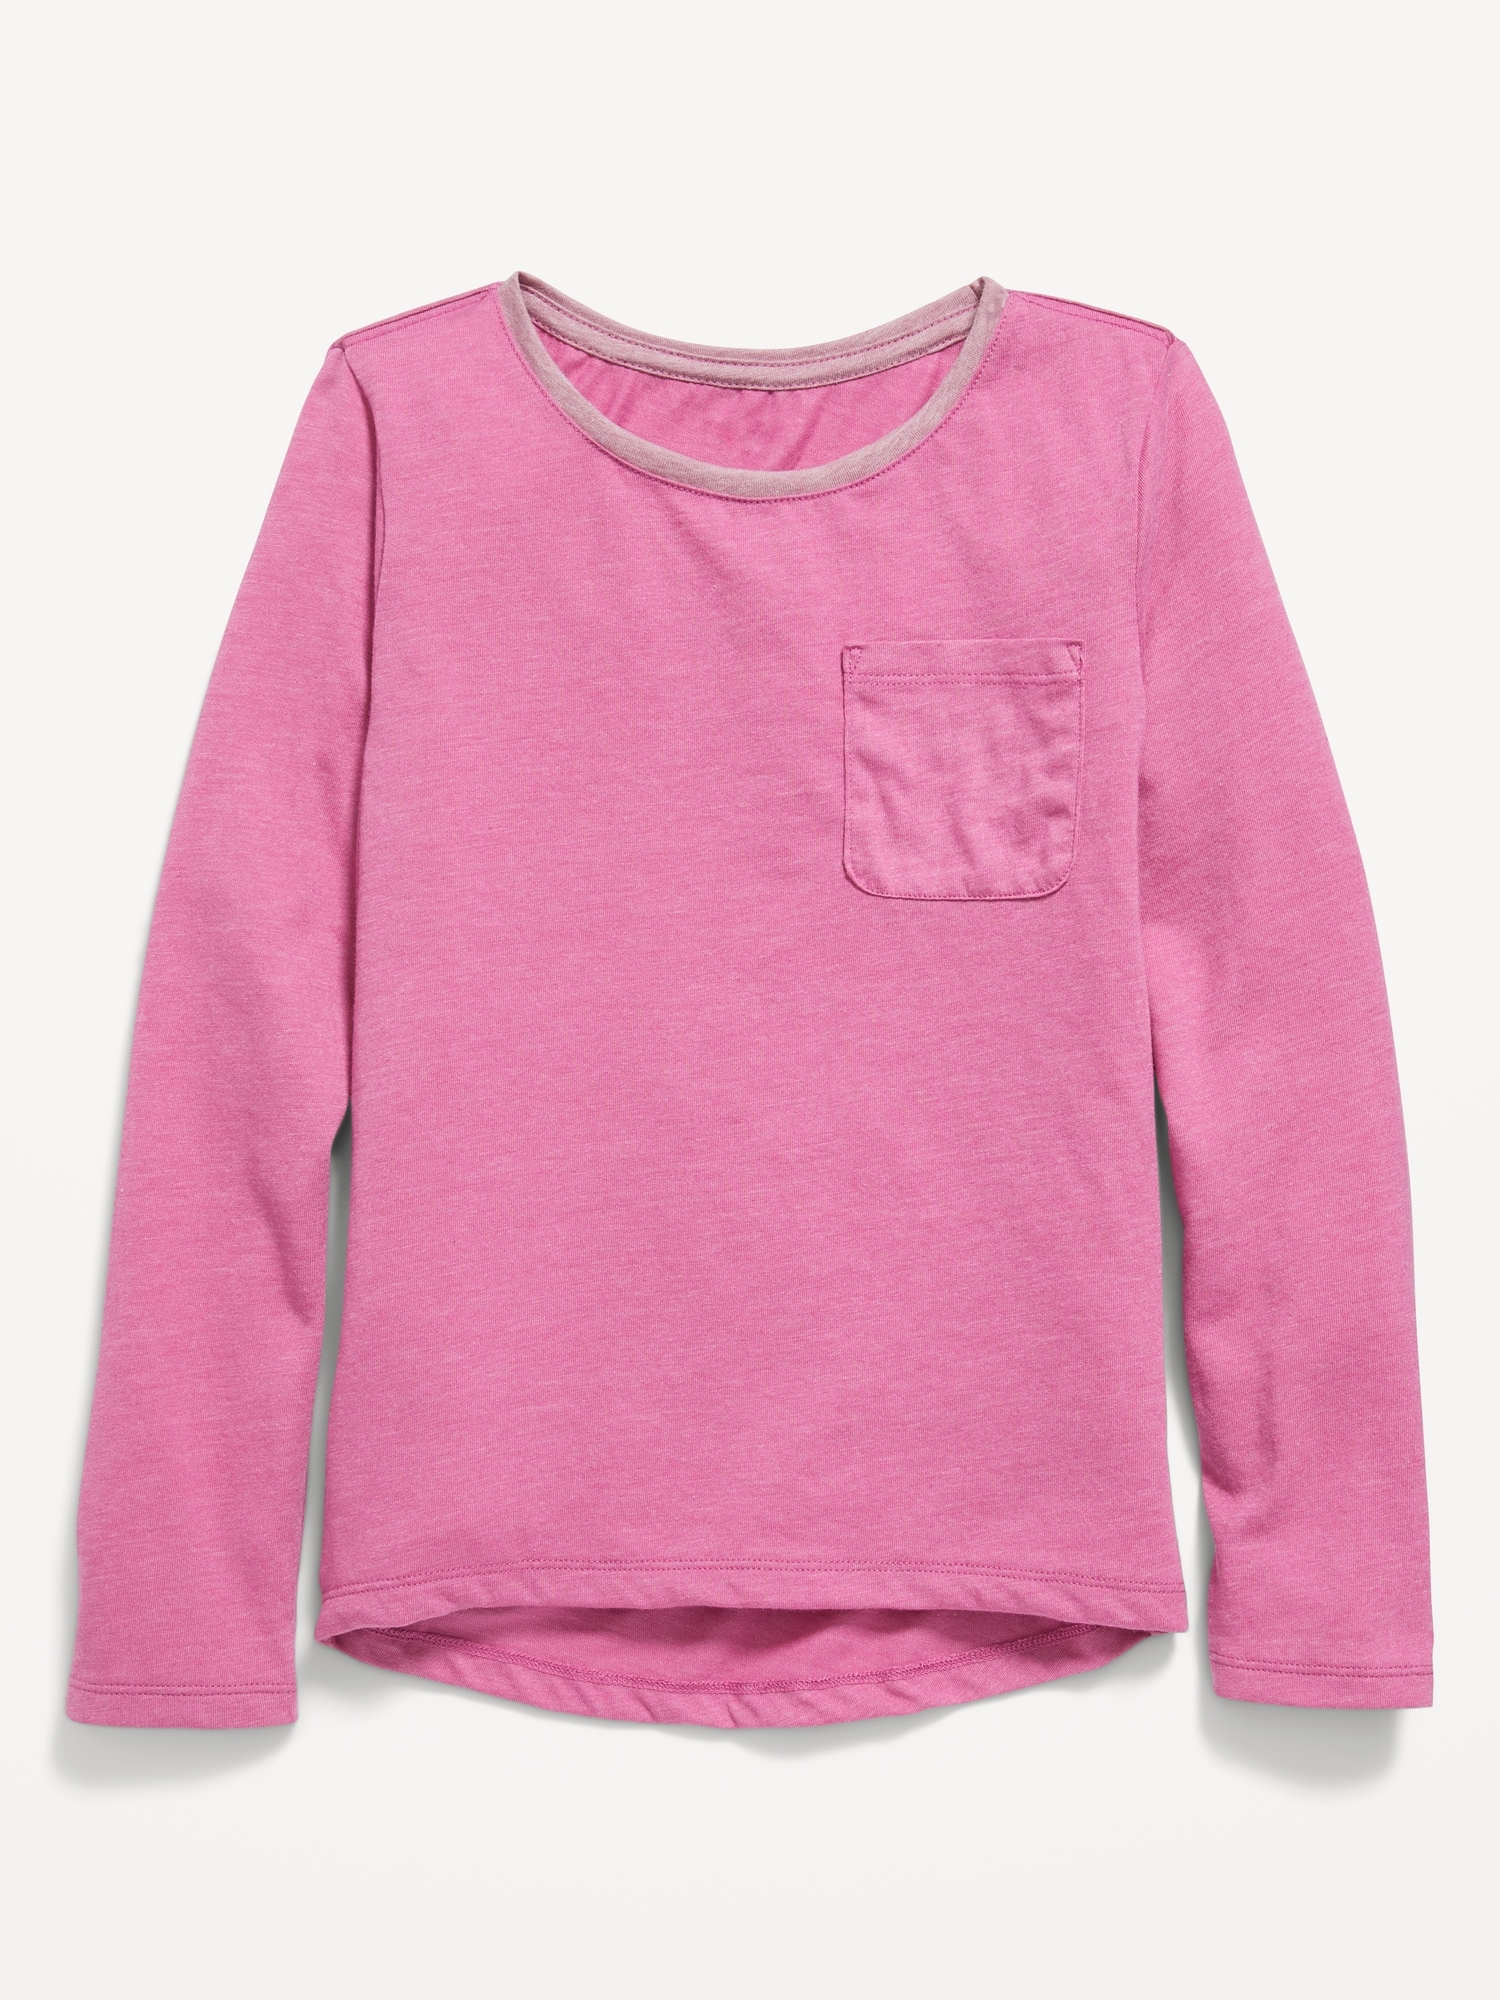 Softest Long-Sleeve Pocket T-Shirt for Girls | Old Navy